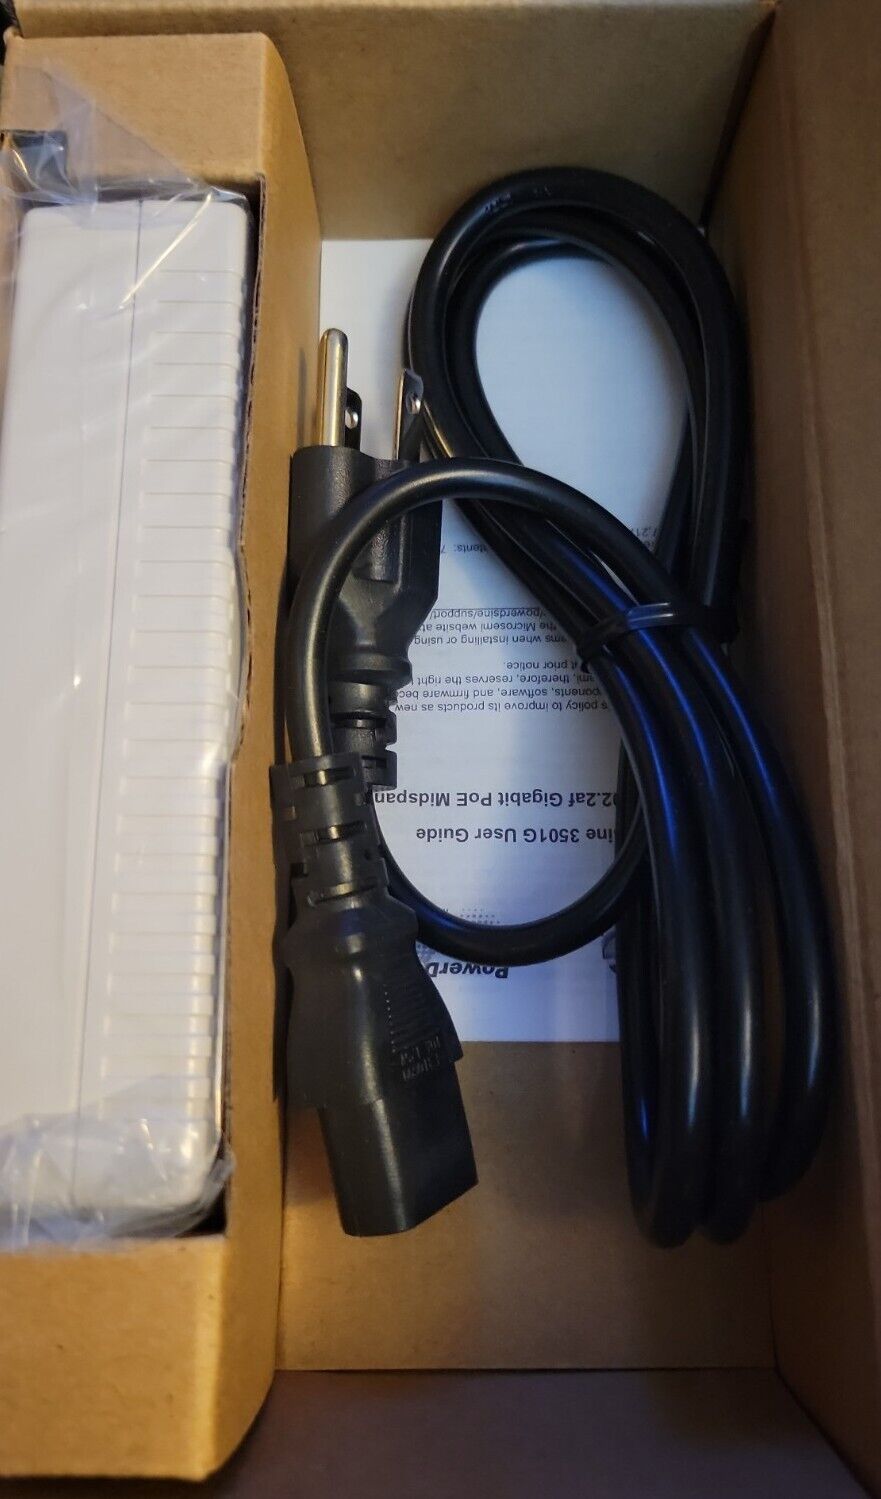 Unused Microsemi PowerDsine 3501G Gigabit PoE Injector Midspan in box